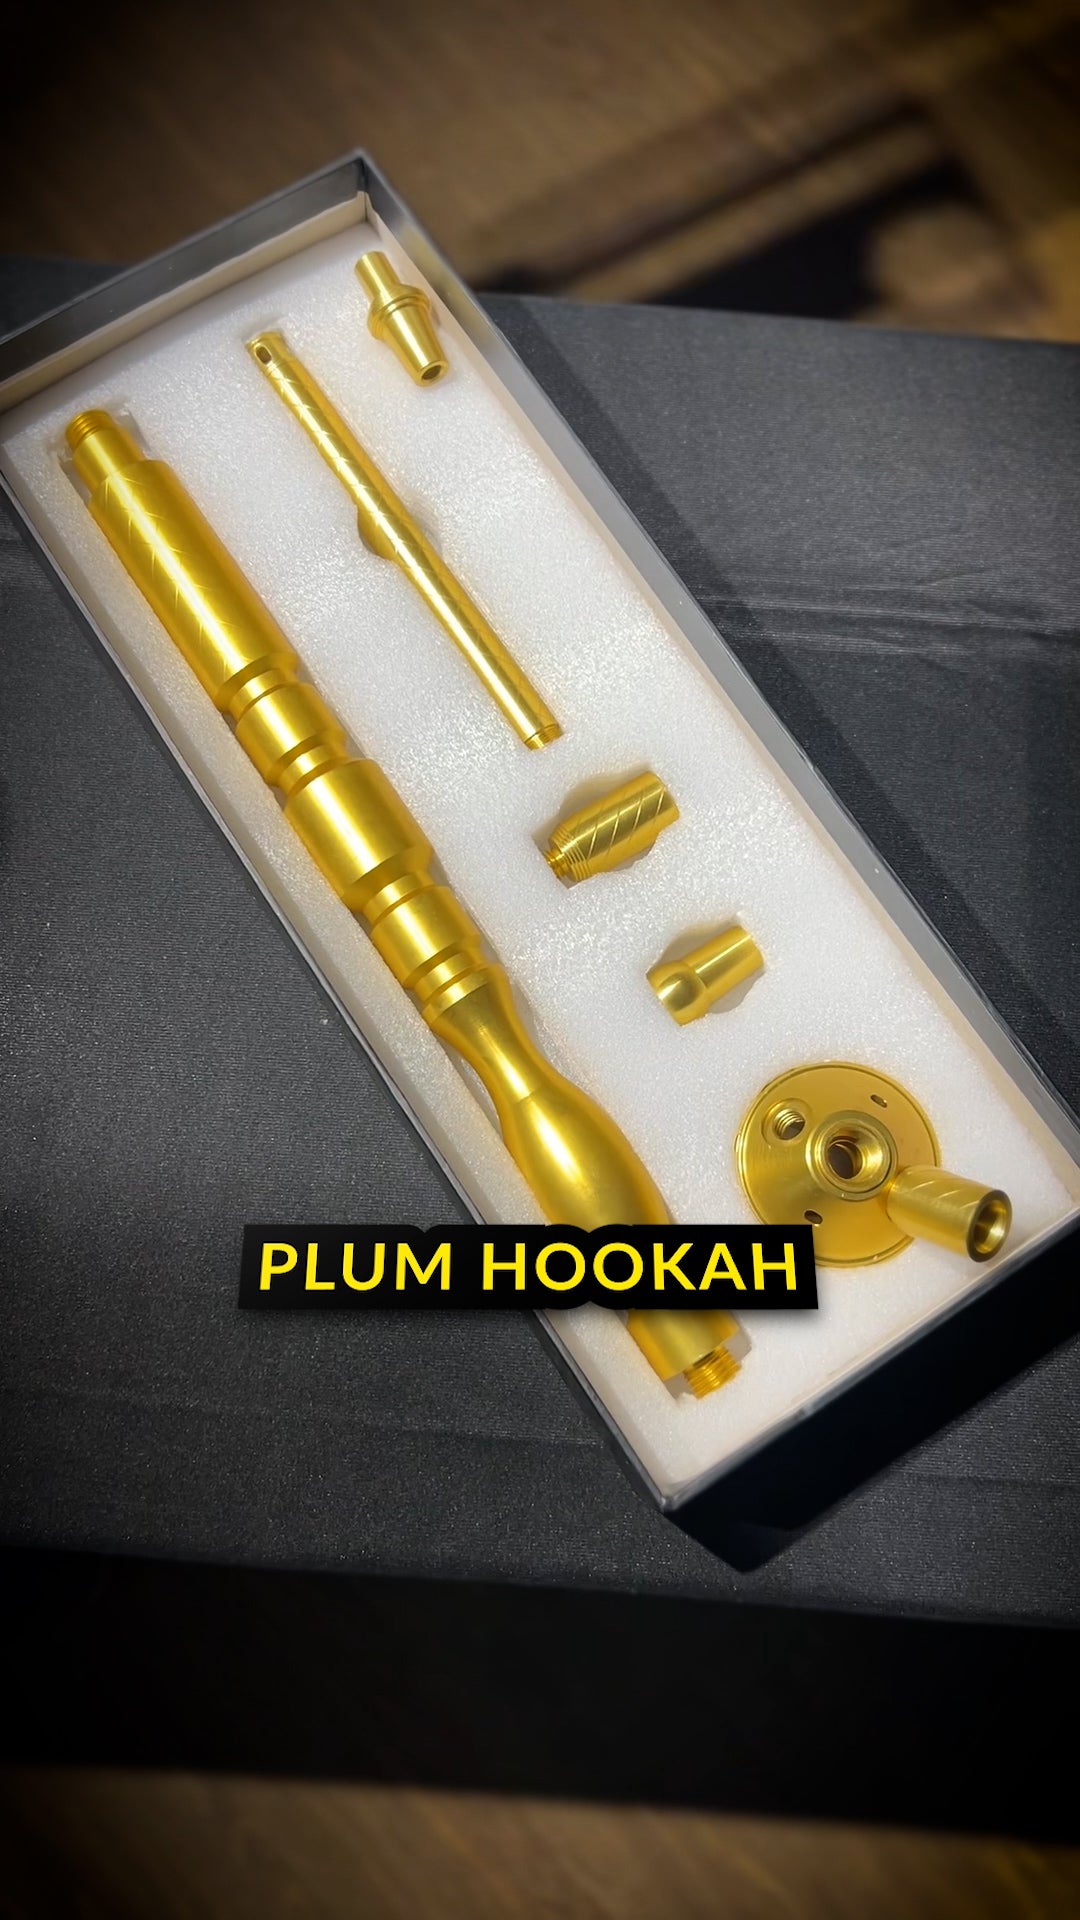 Plum Hookah - Golden